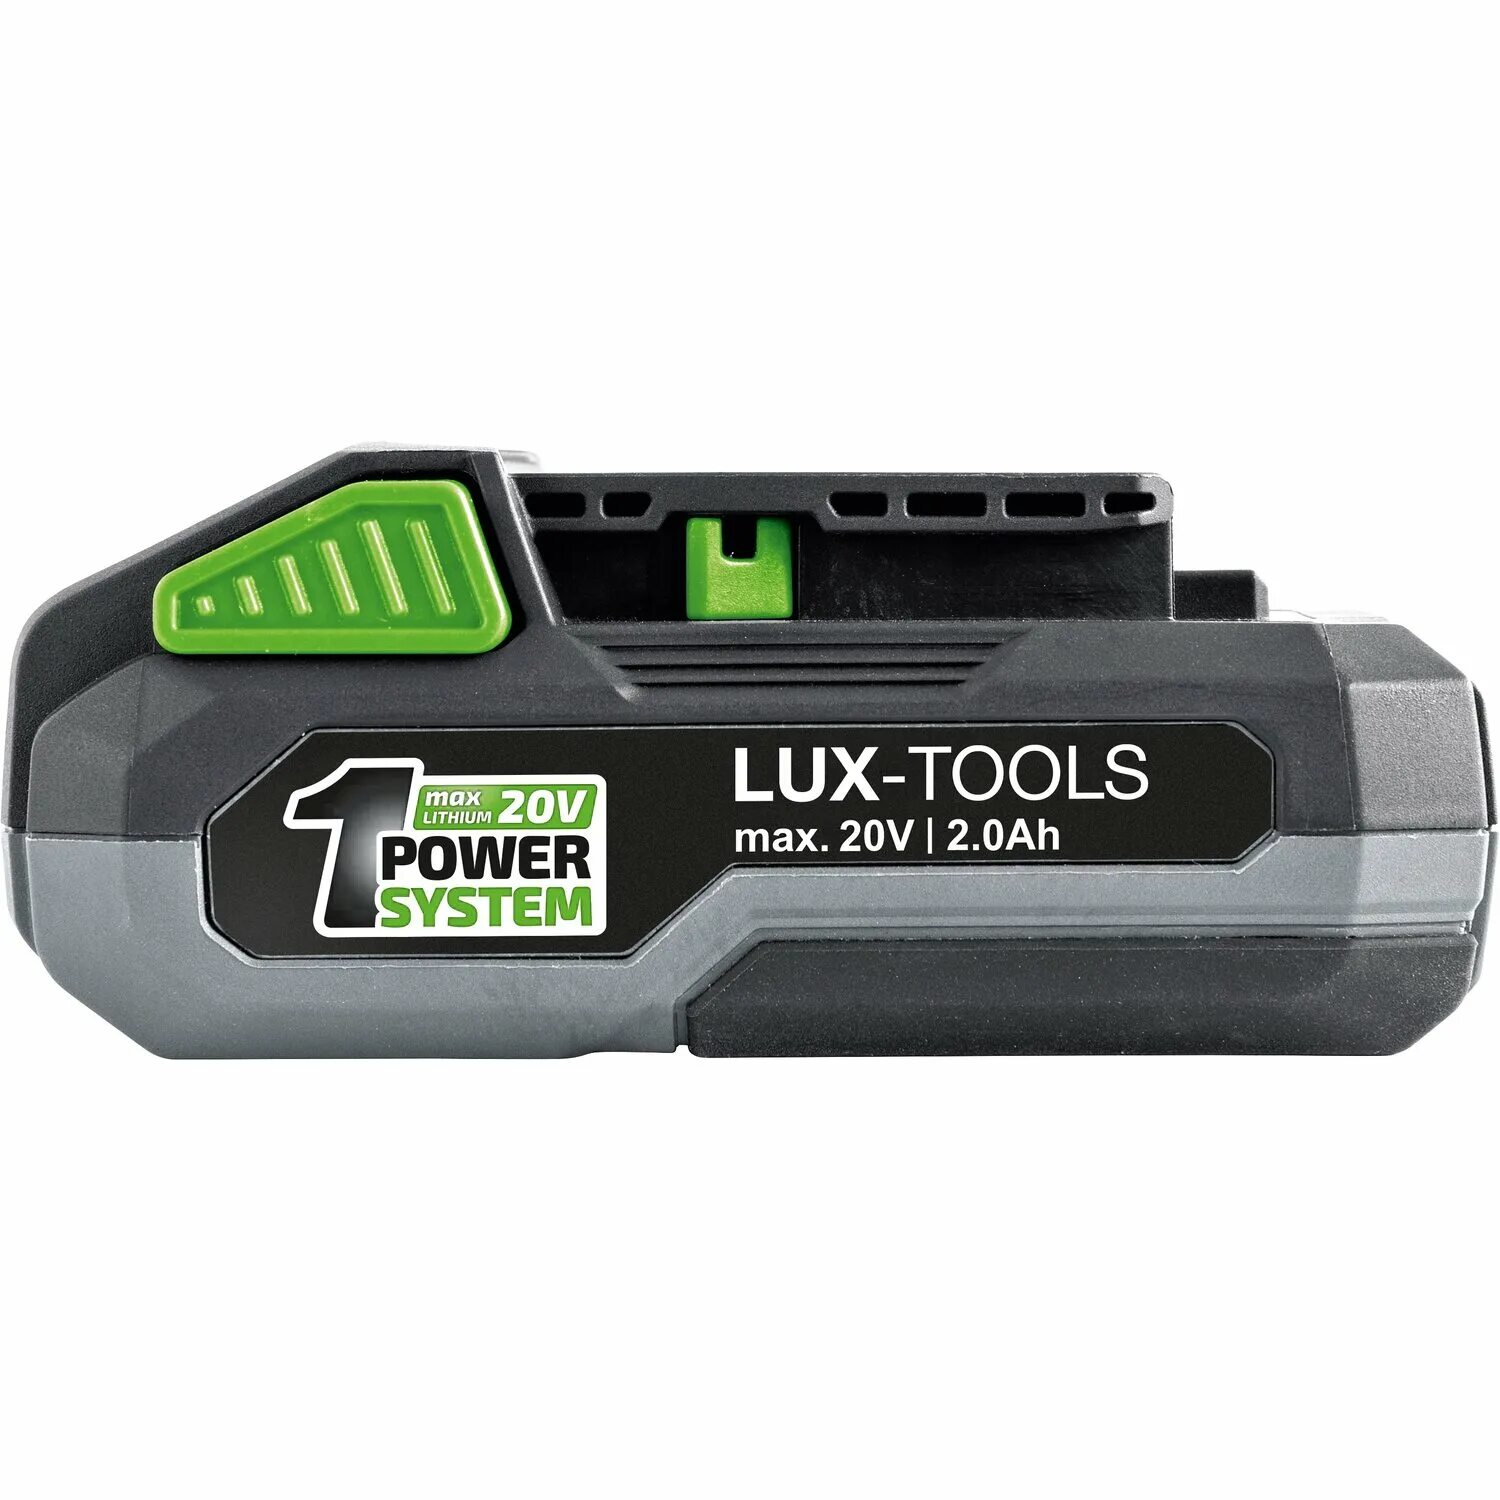 Lux tools аккумуляторная. Аккумулятор Lux Tools 20v. Шуруповерт Lux Tools 20v аккумулятор. Аккумулятор Lux Tools 20v 2.0Ah. Аккумулятор Lux-Tools 20v Obi.